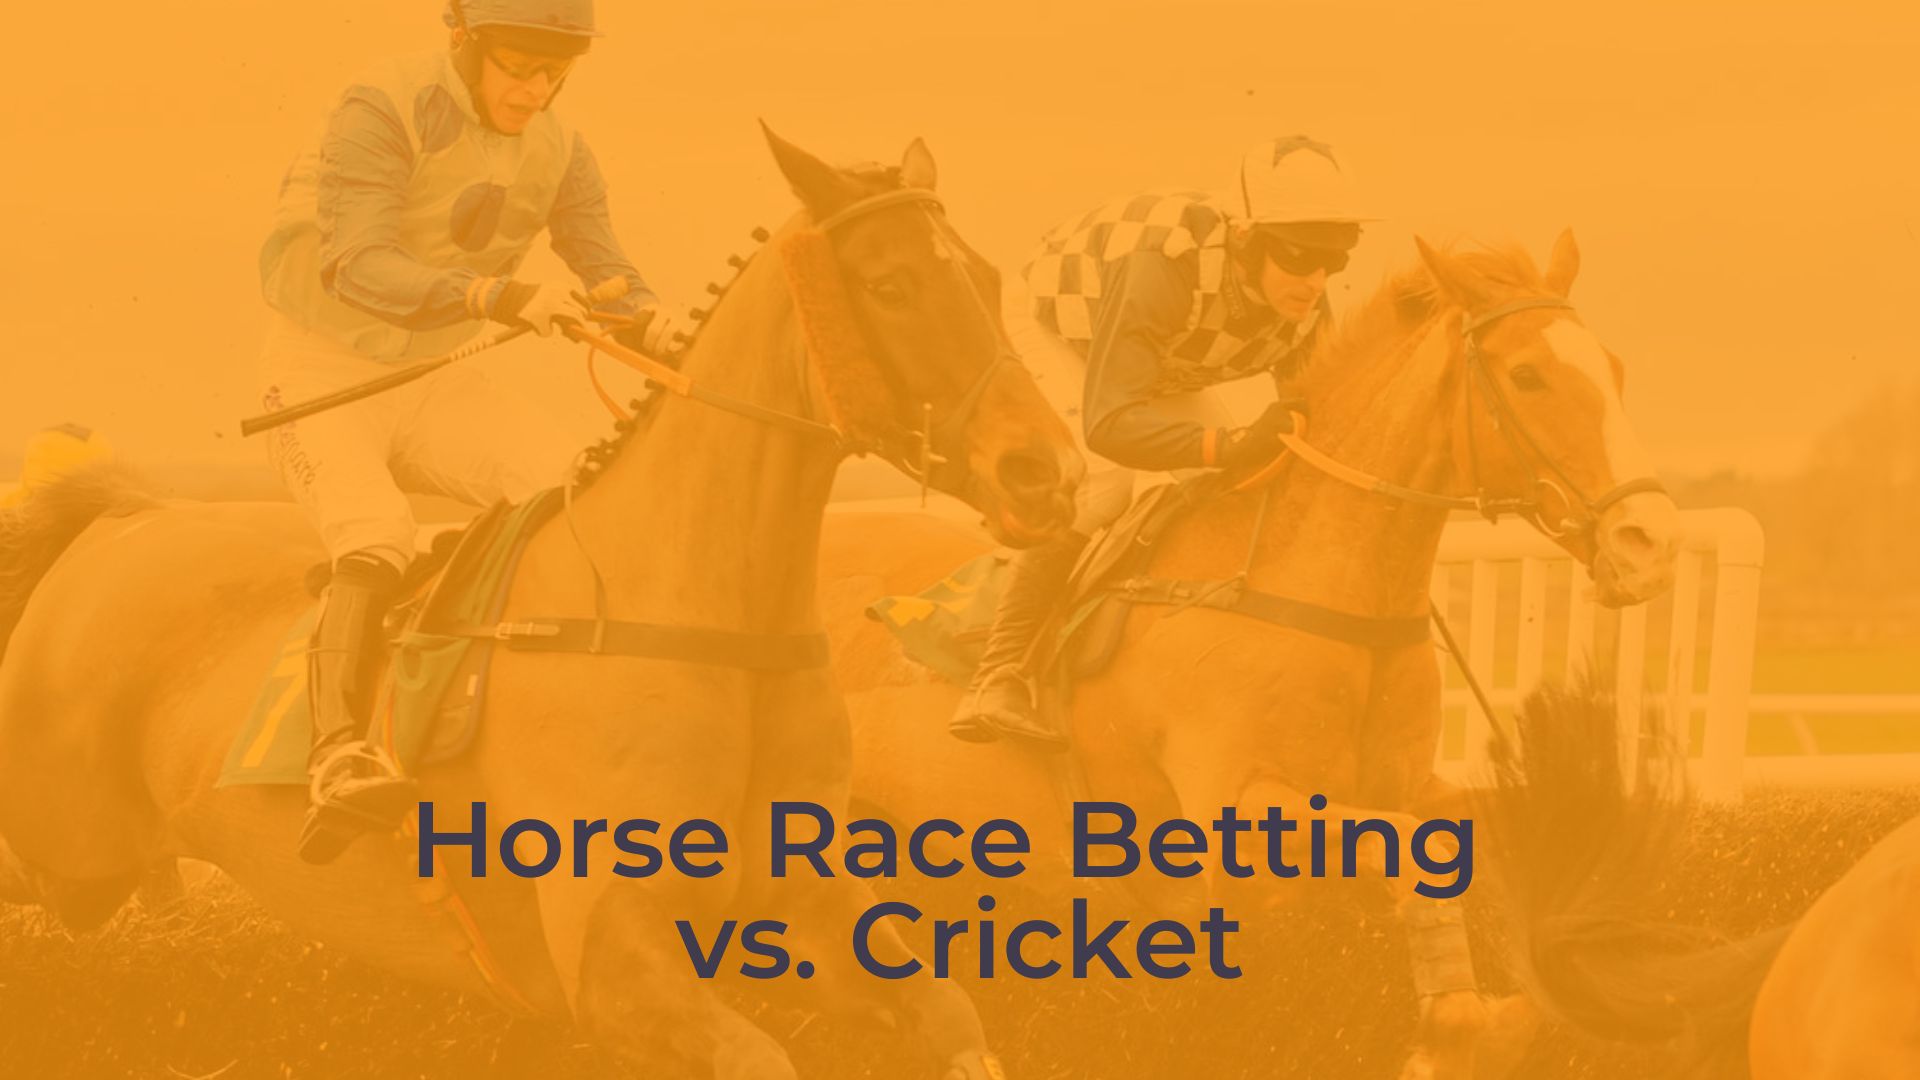 Horse Race Betting vs. Cricket